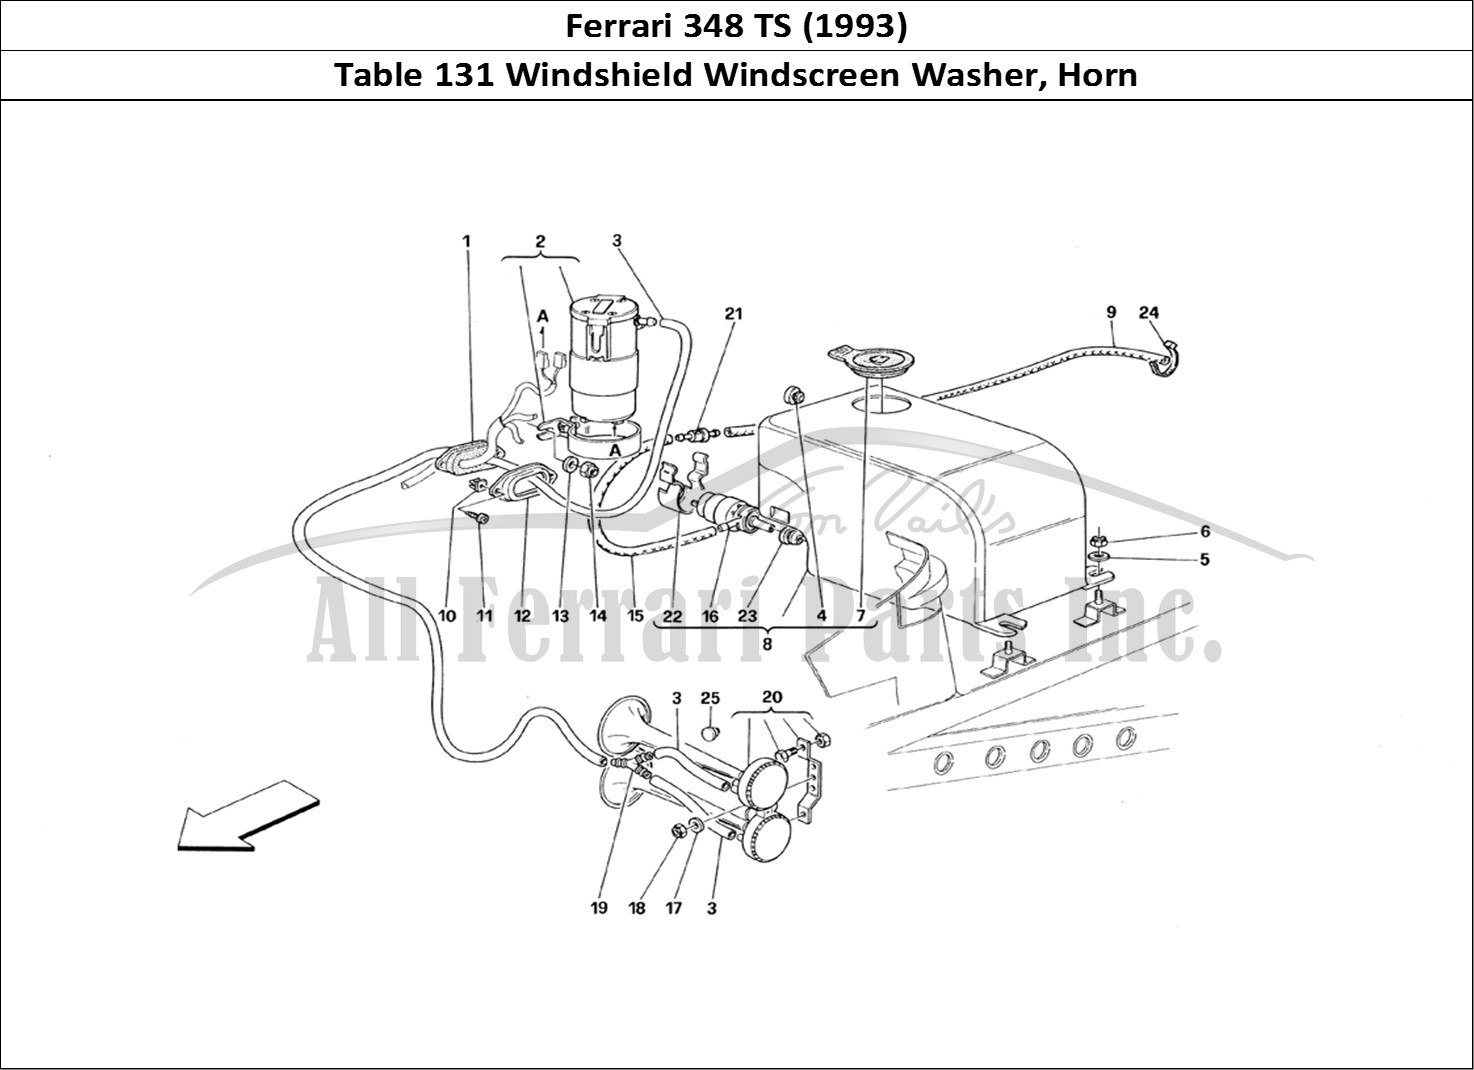 Ferrari Parts Ferrari 348 TB (1993) Page 131 Glass Washer and Horns